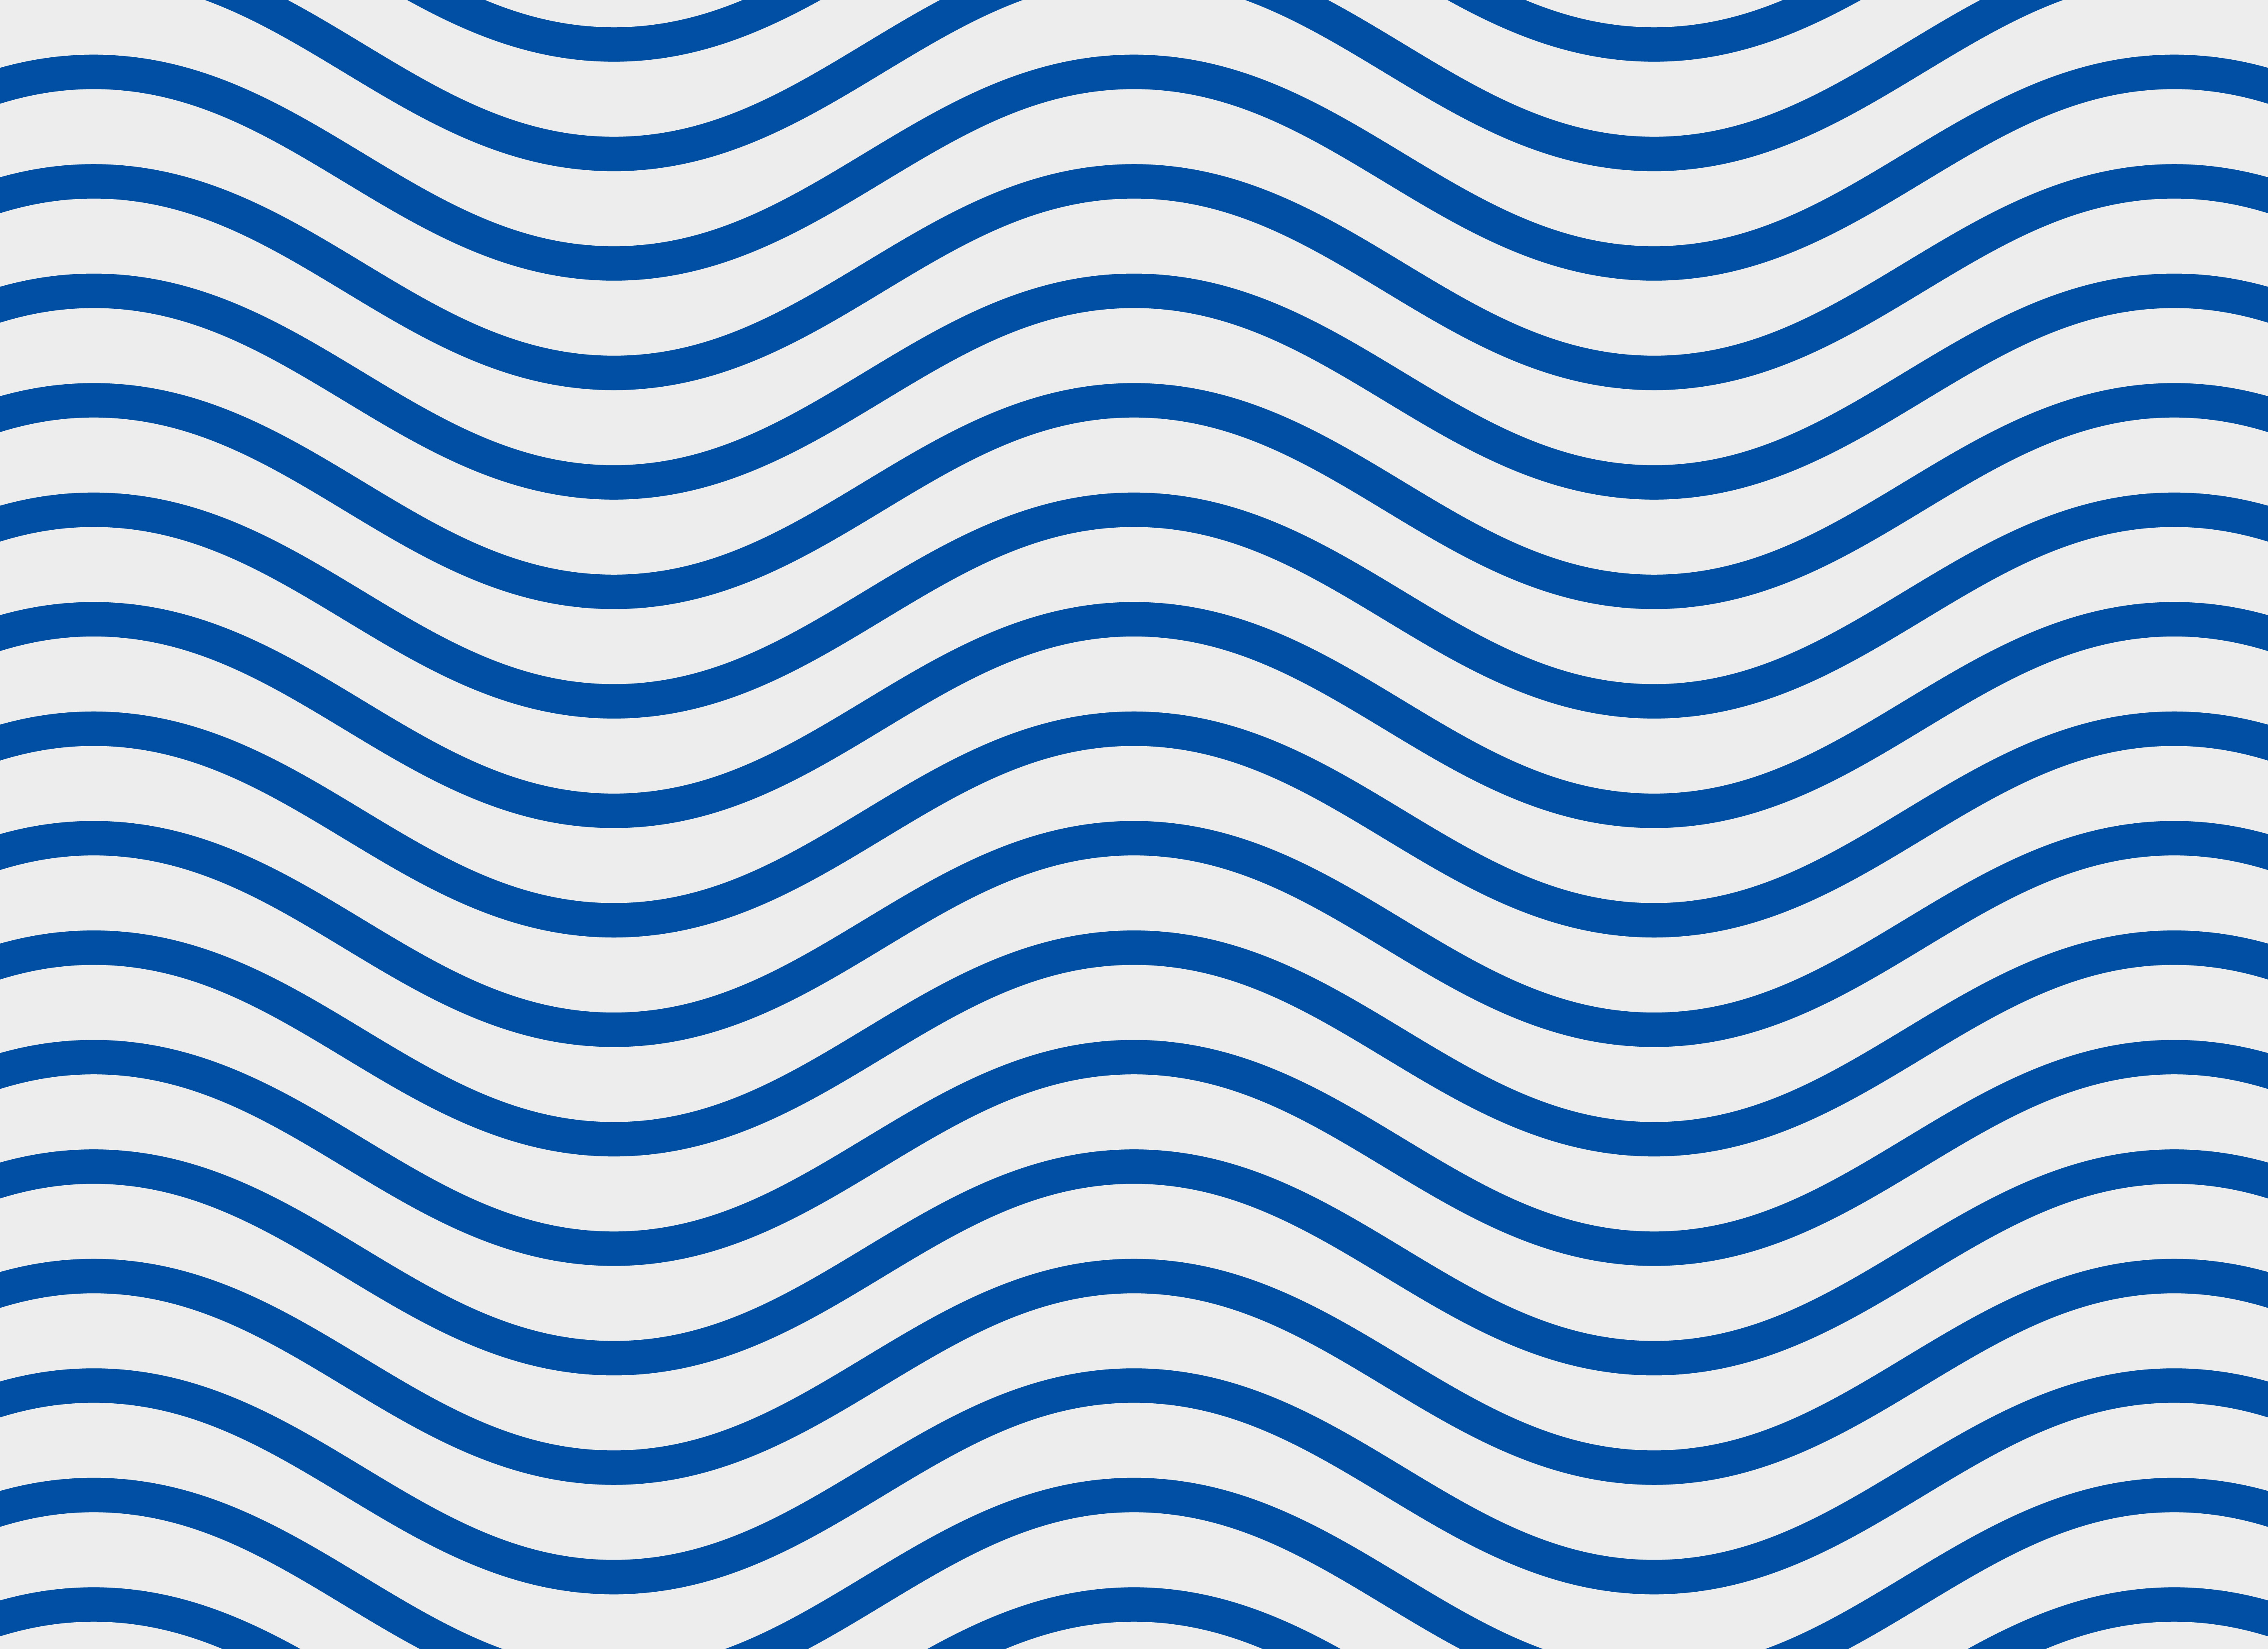 blue sine wave pattern background - Download Free Vector Art, Stock